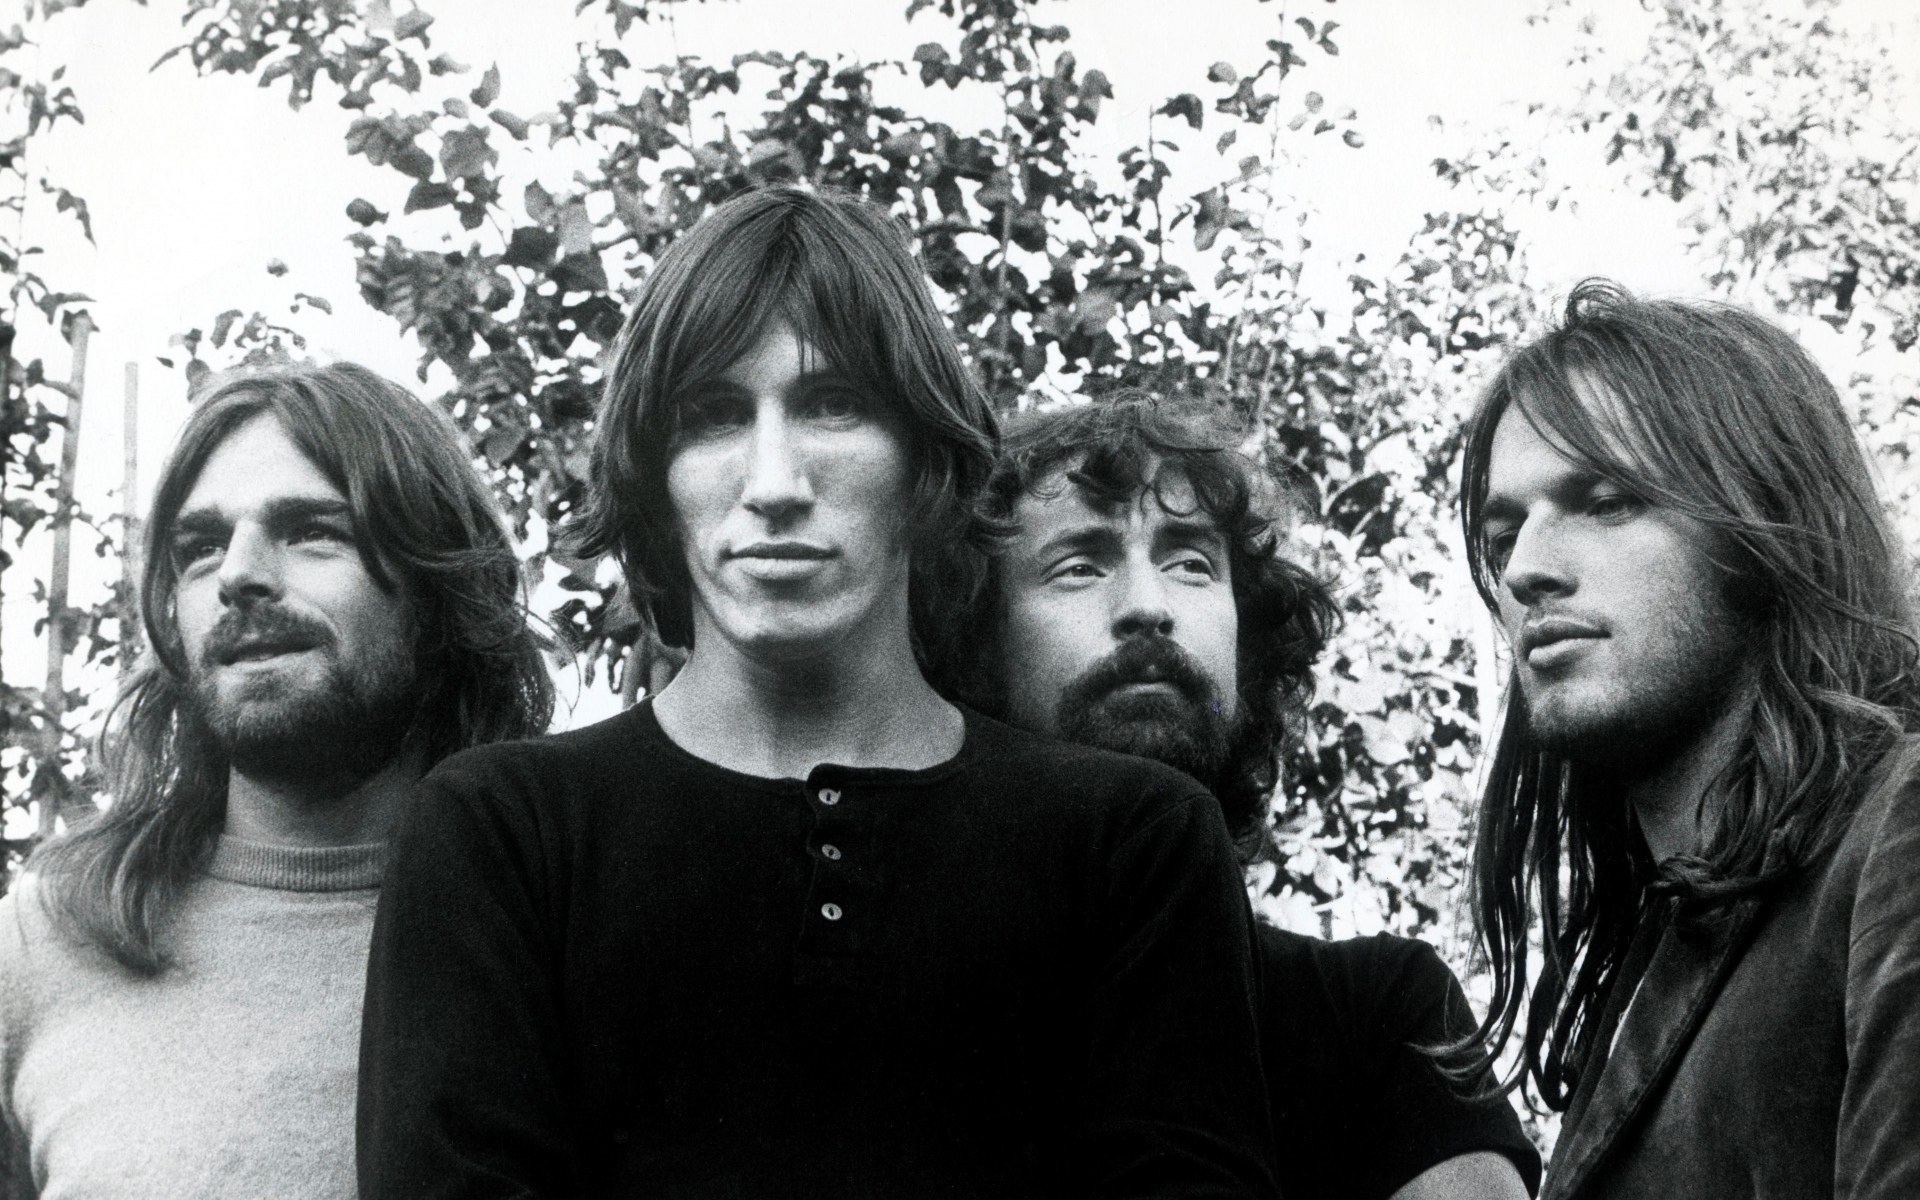 Картинки Pink Floyd, рок - группа, Сида Барретта, Роджером Уотерсом, Дэвид Гилмор, Ричарда Райта, м.т. фото и обои на рабочий стол